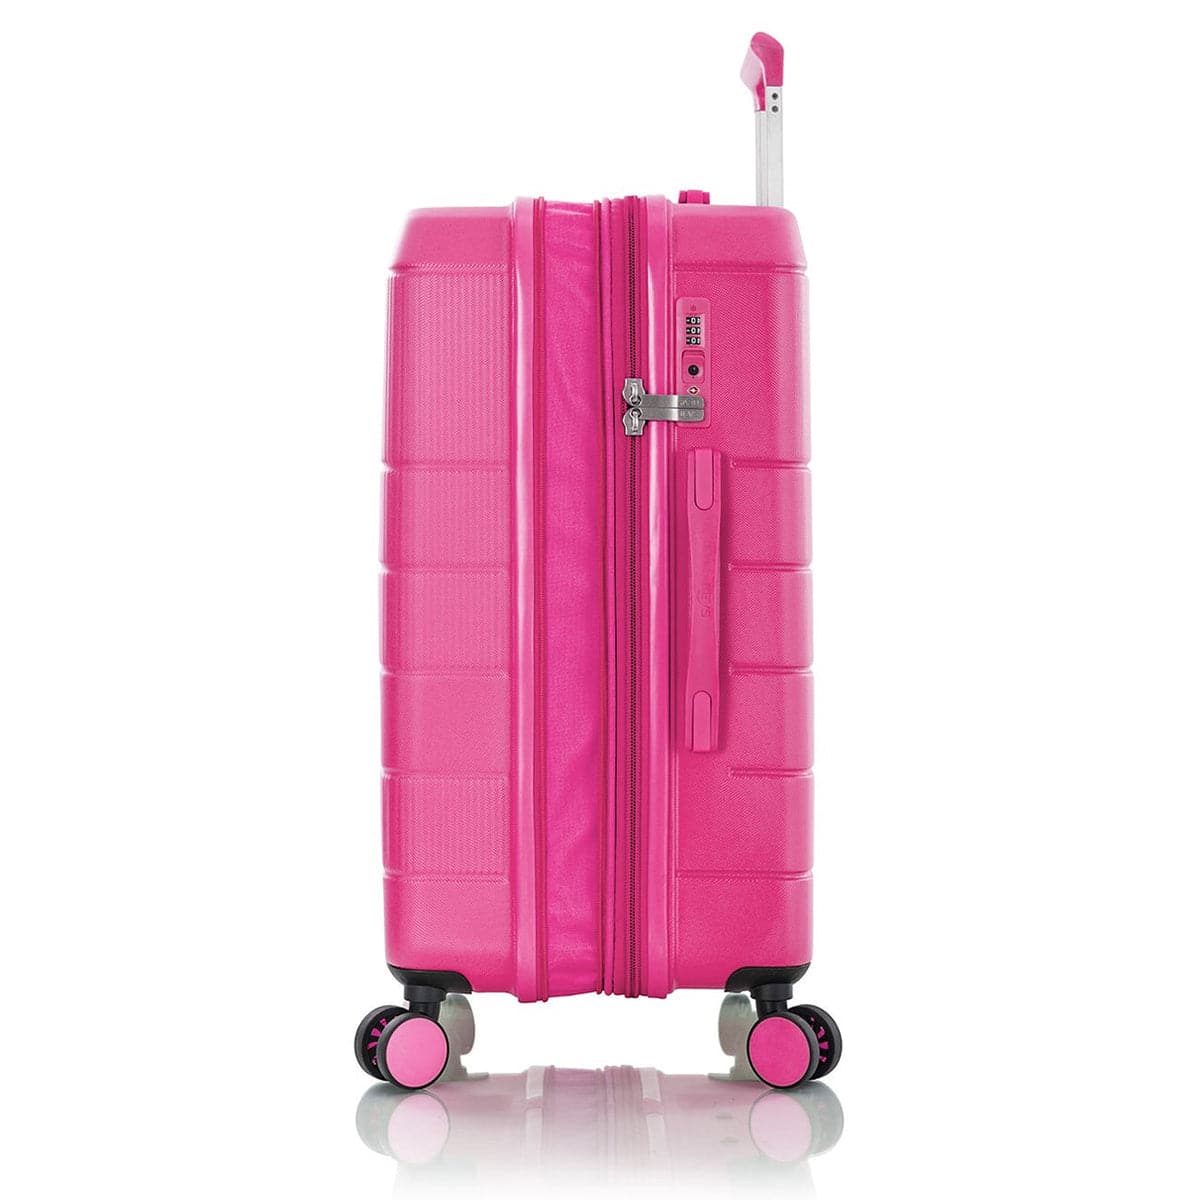 Heys Neo 26" Spinner Luggage